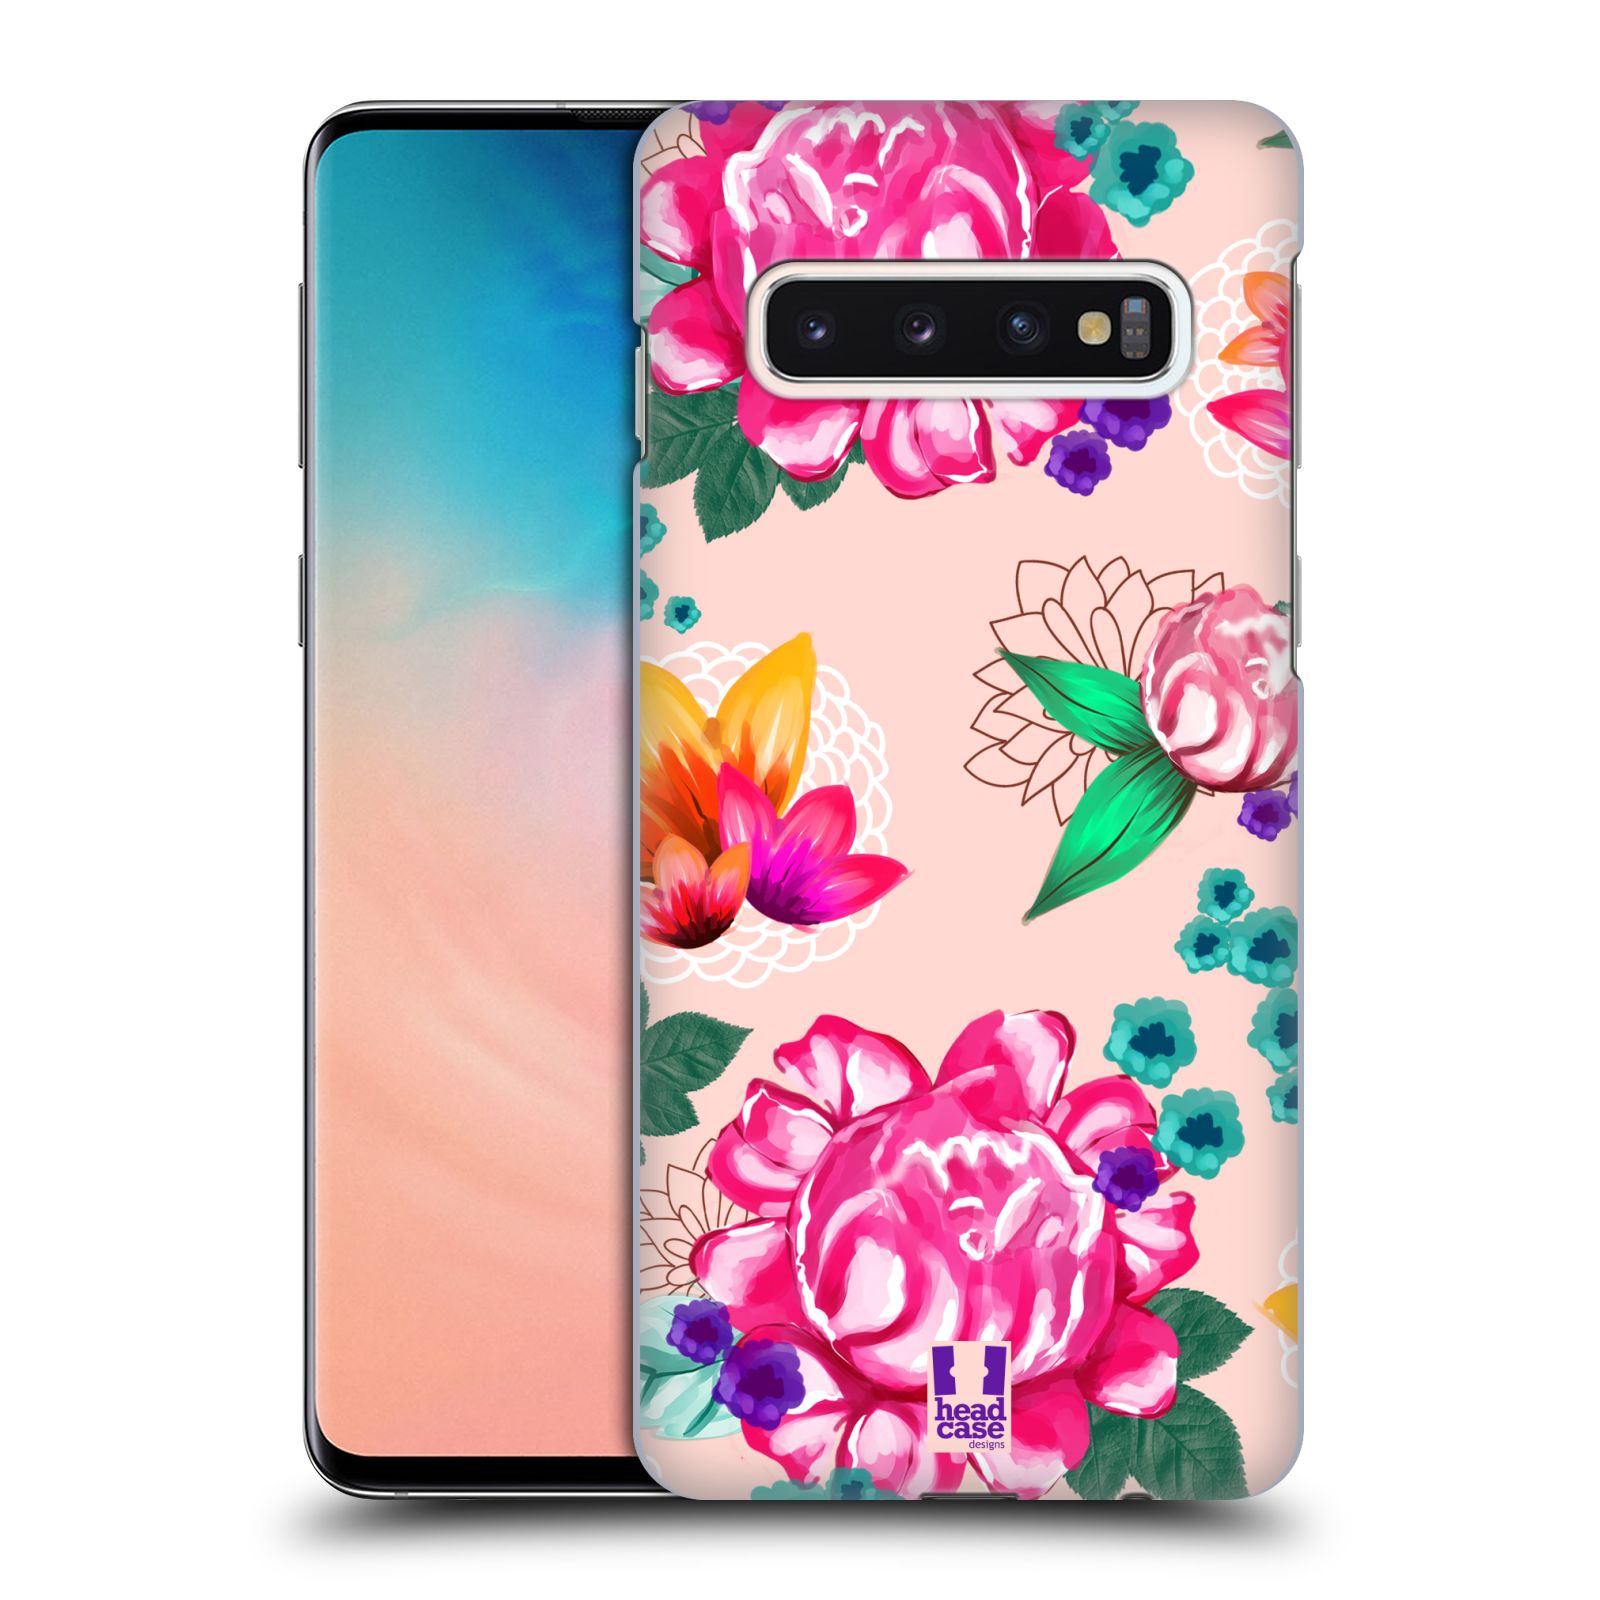 Pouzdro na mobil Samsung Galaxy S10 - HEAD CASE - vzor Malované květiny barevné SVĚTLE RŮŽOVÁ